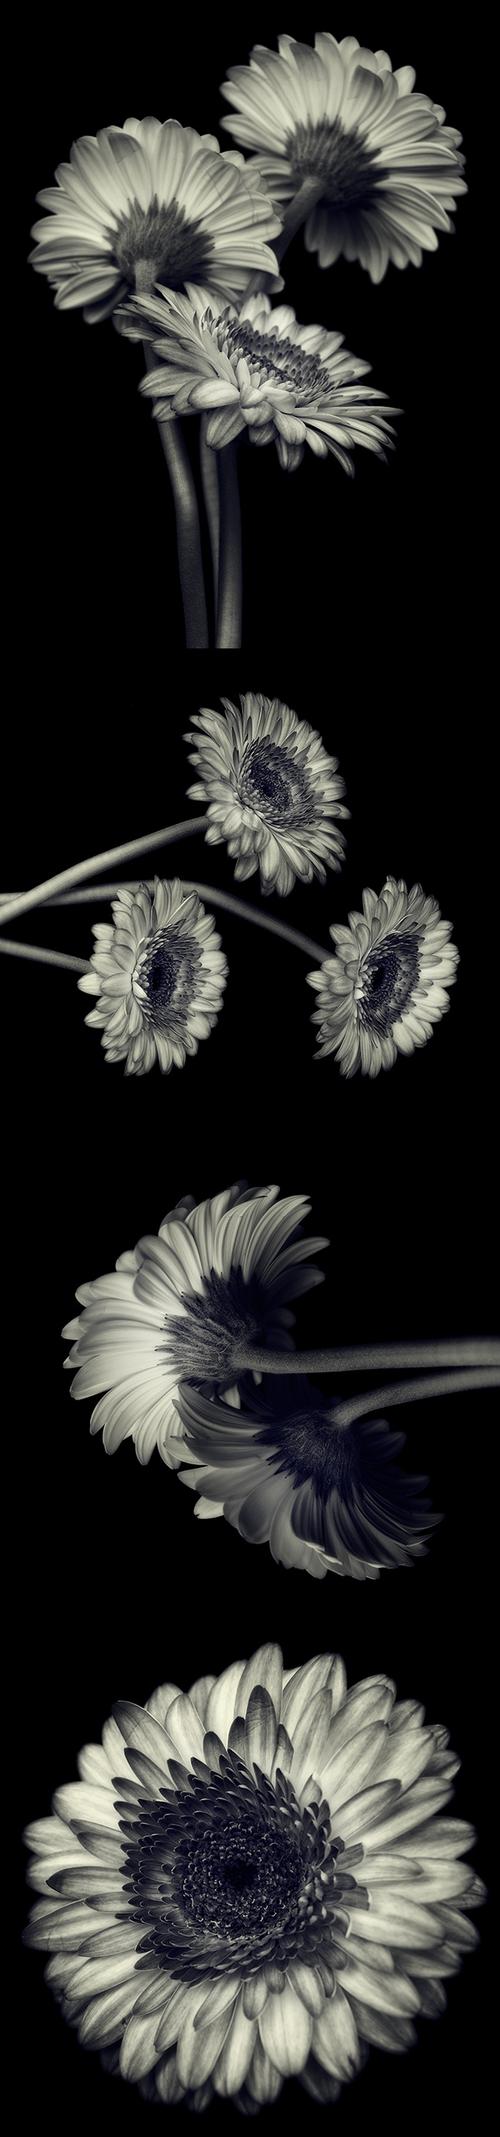 gerbera非洲菊花黑白照片